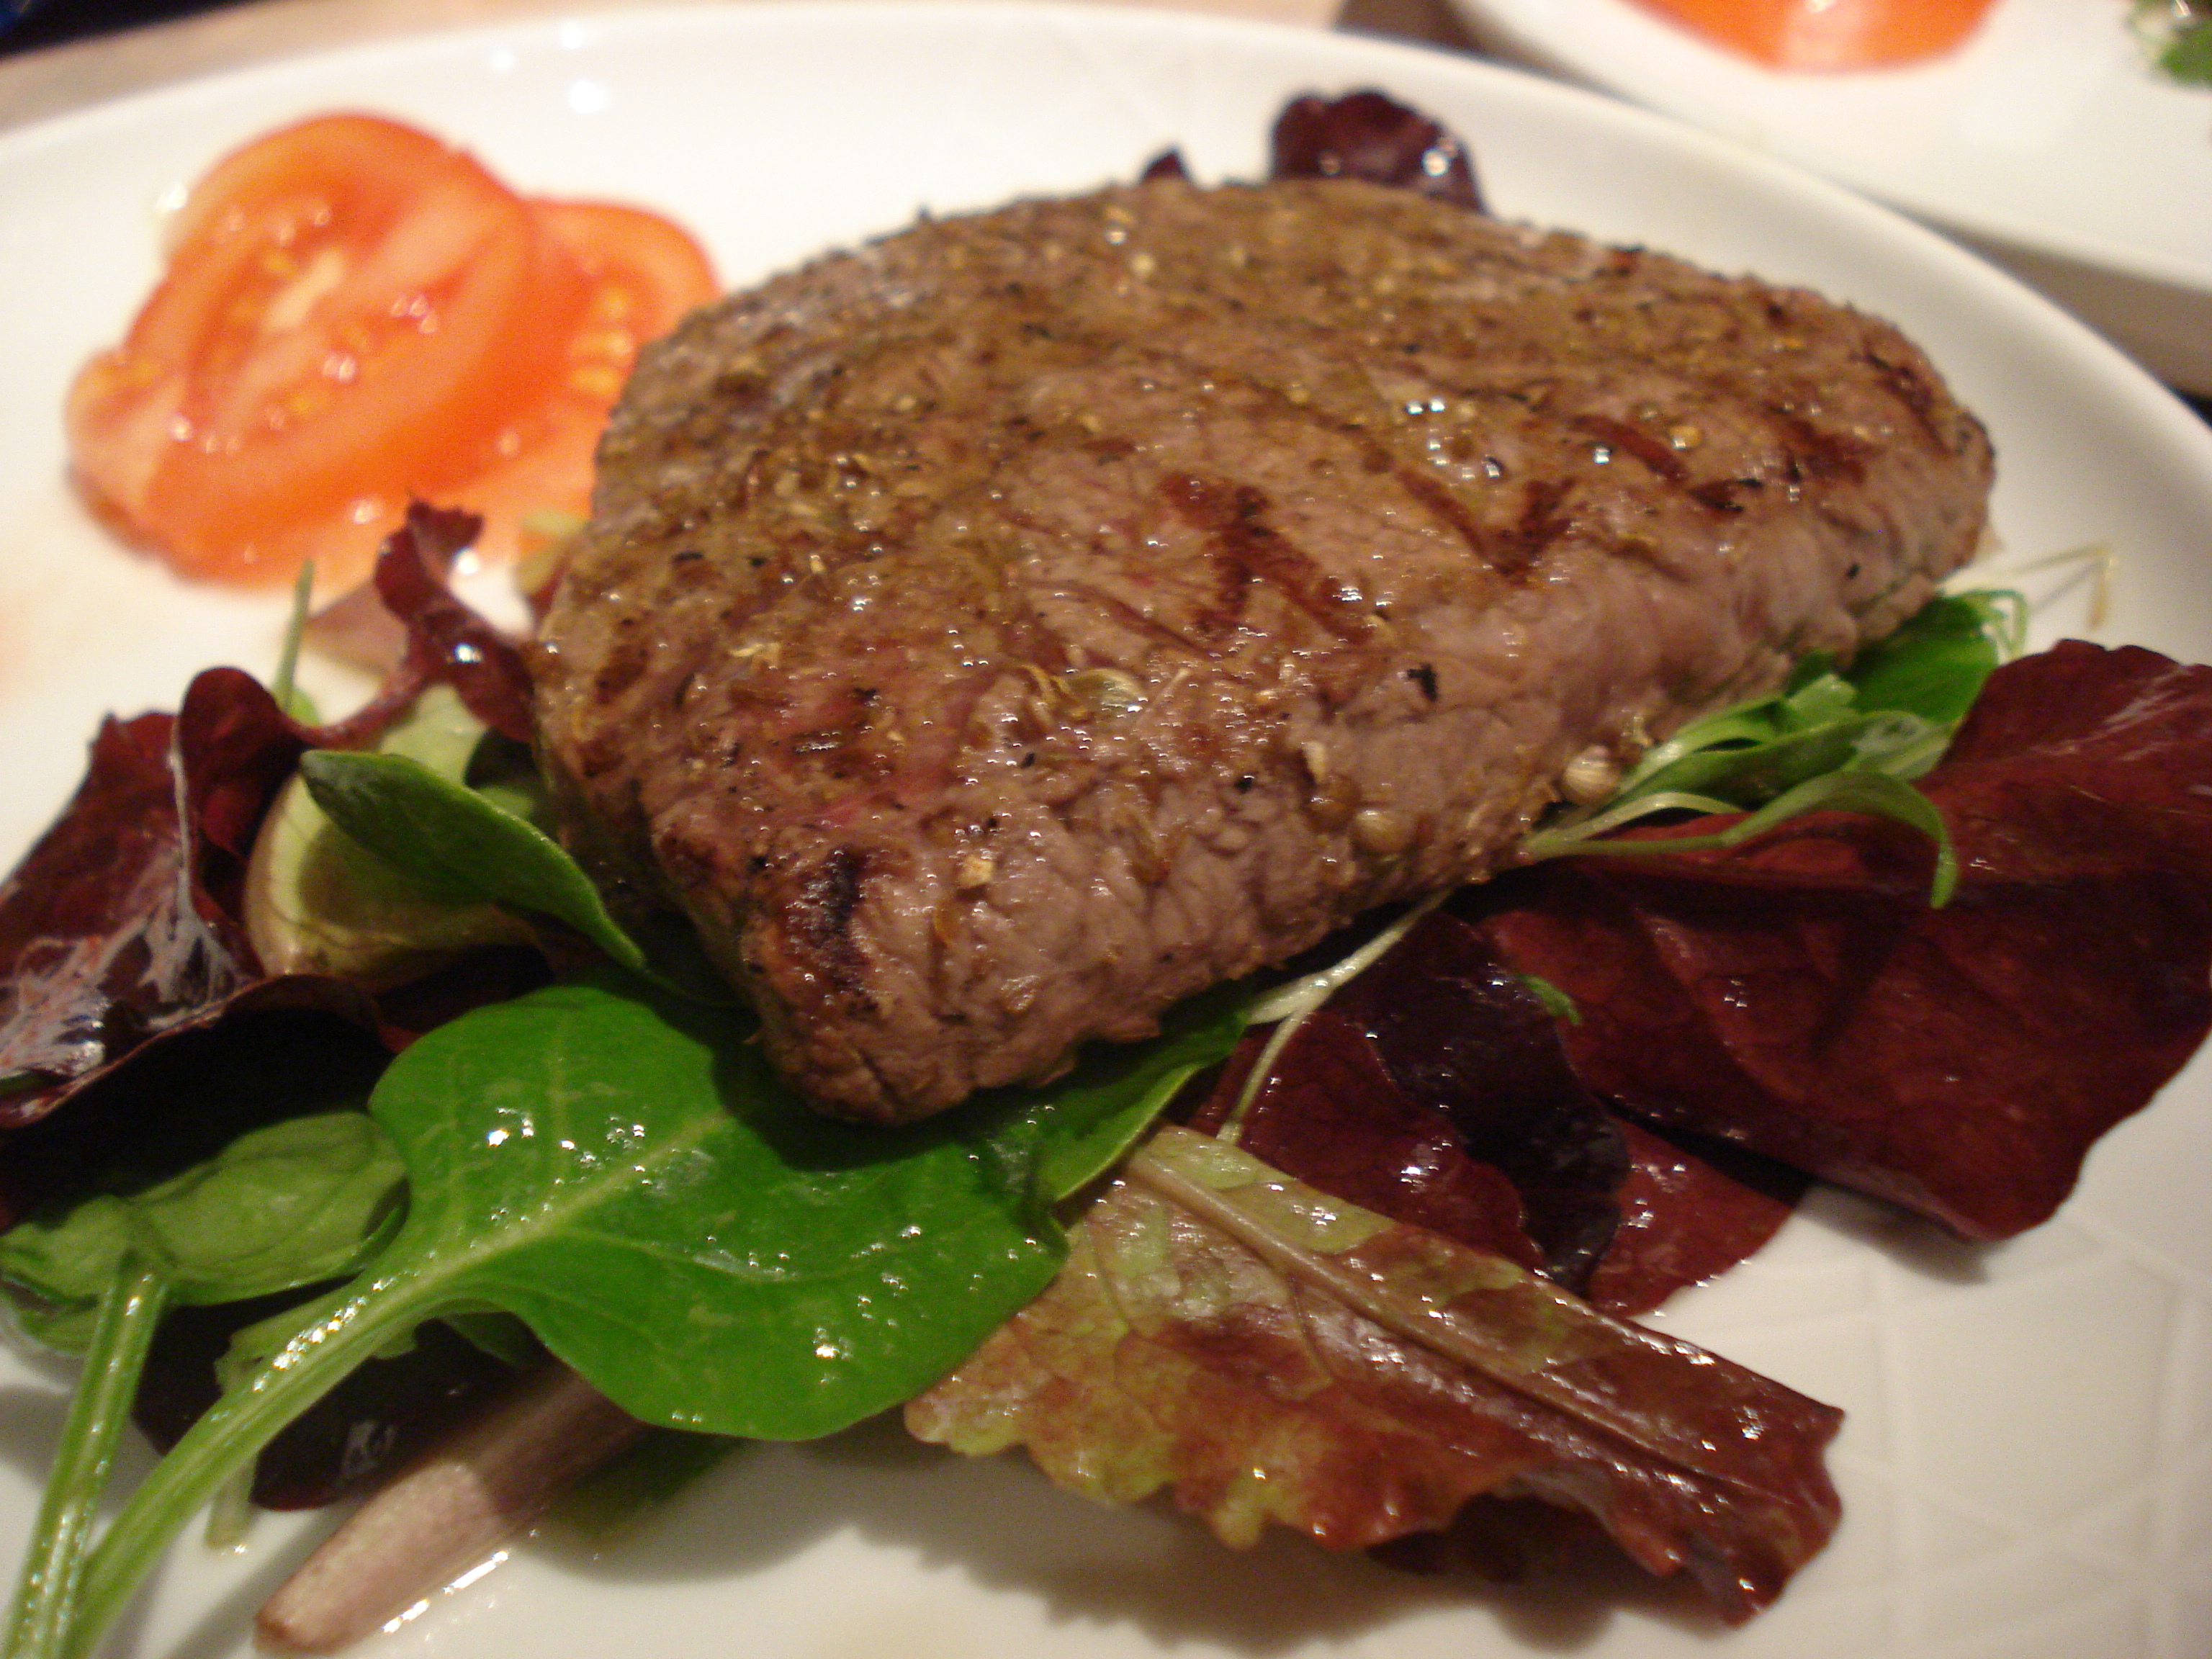 cumin and coriander steak salad